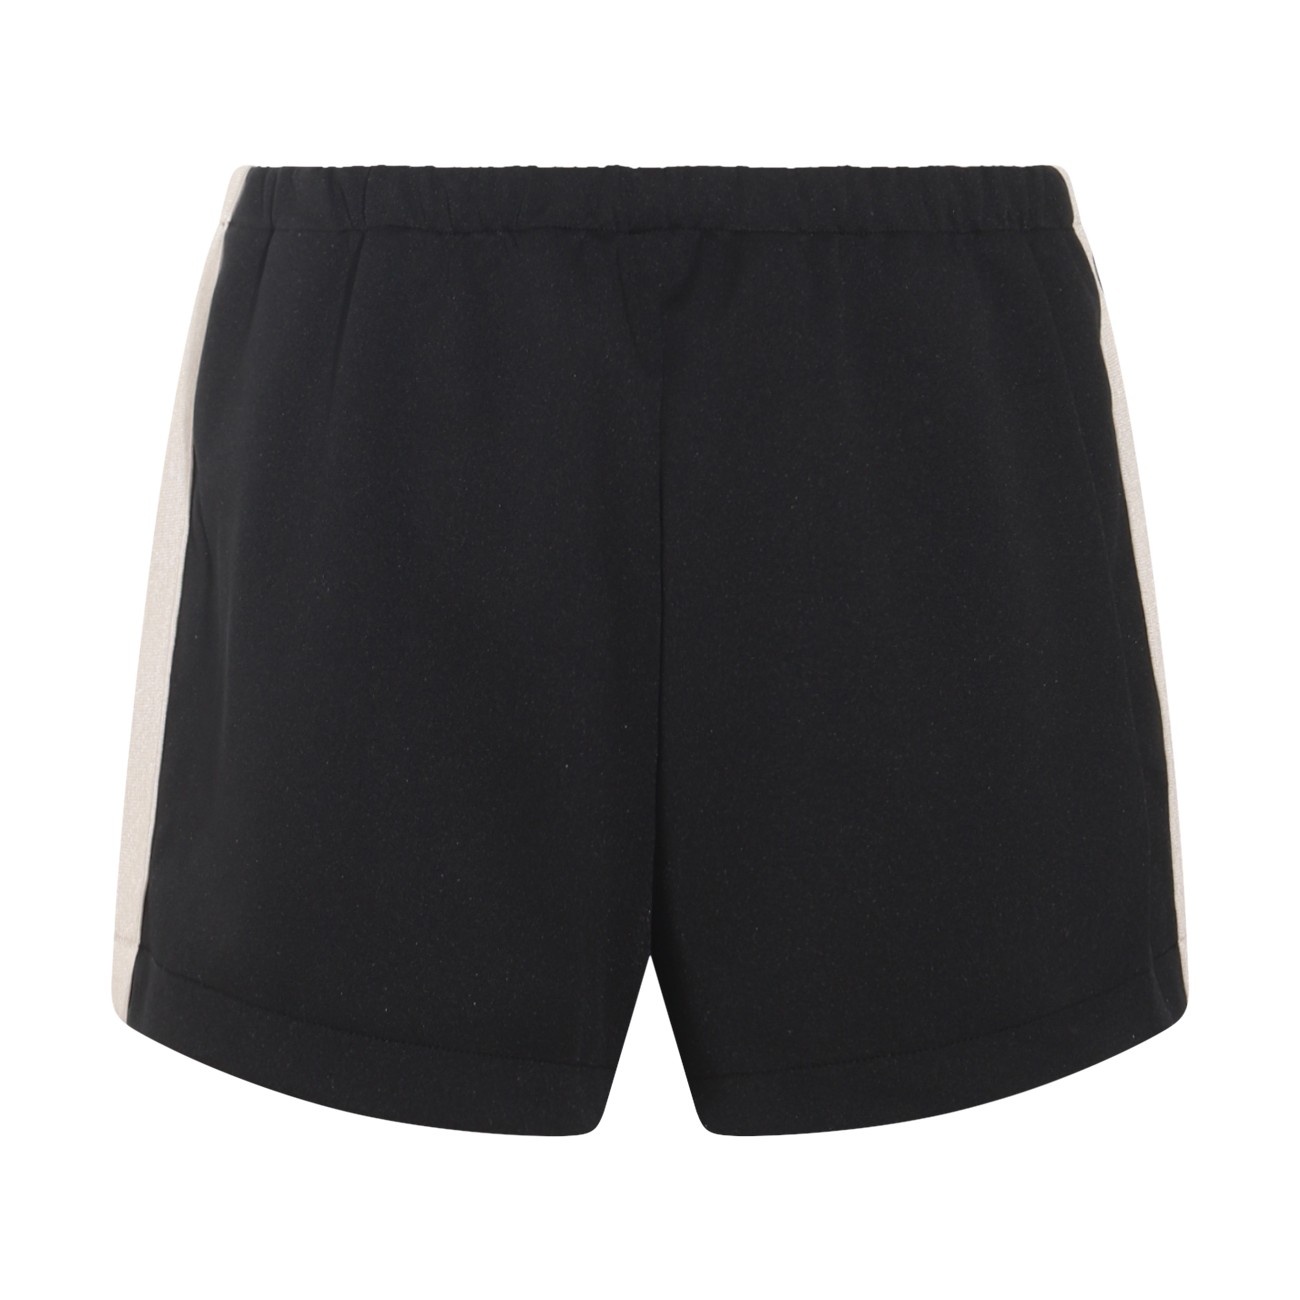 black shorts - 2